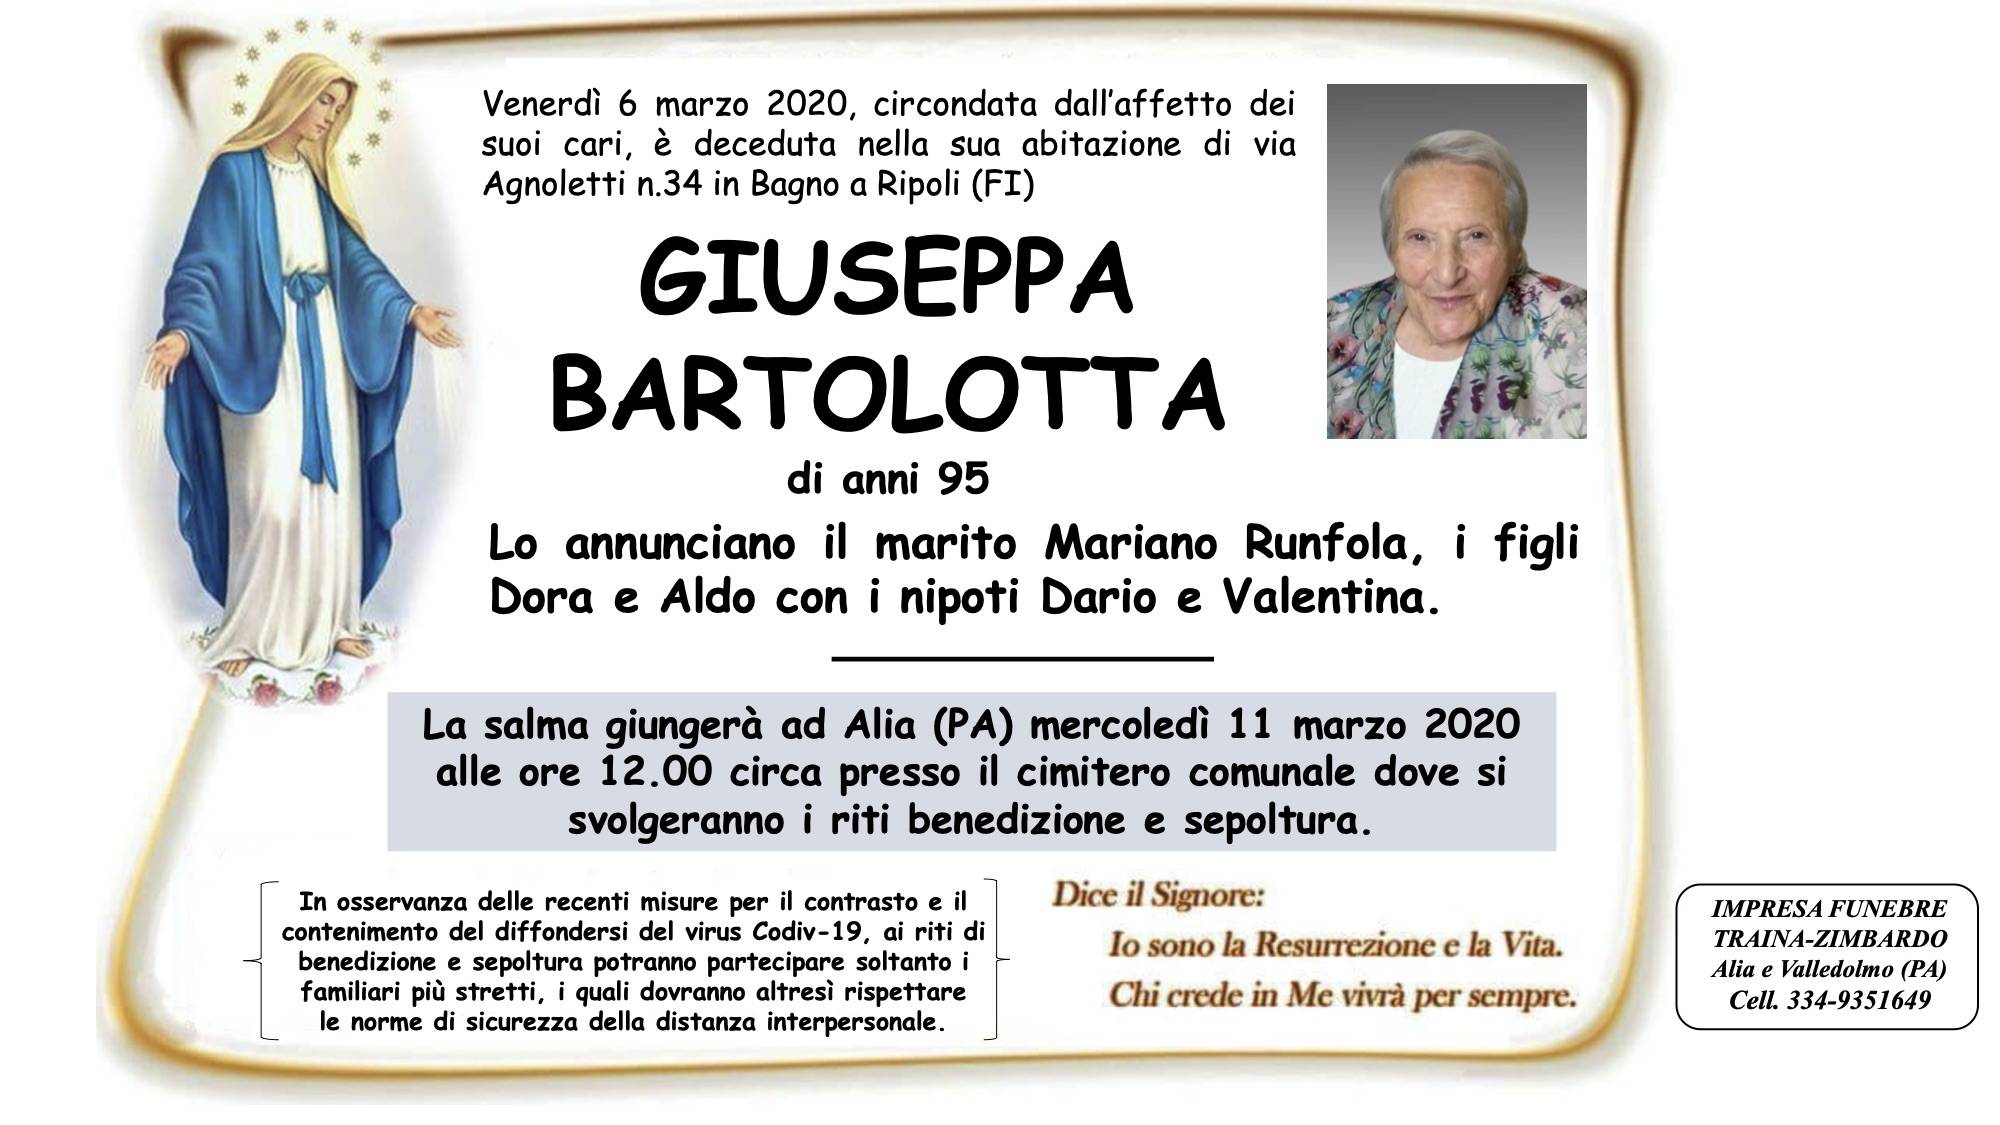 Giuseppa Bartolotta